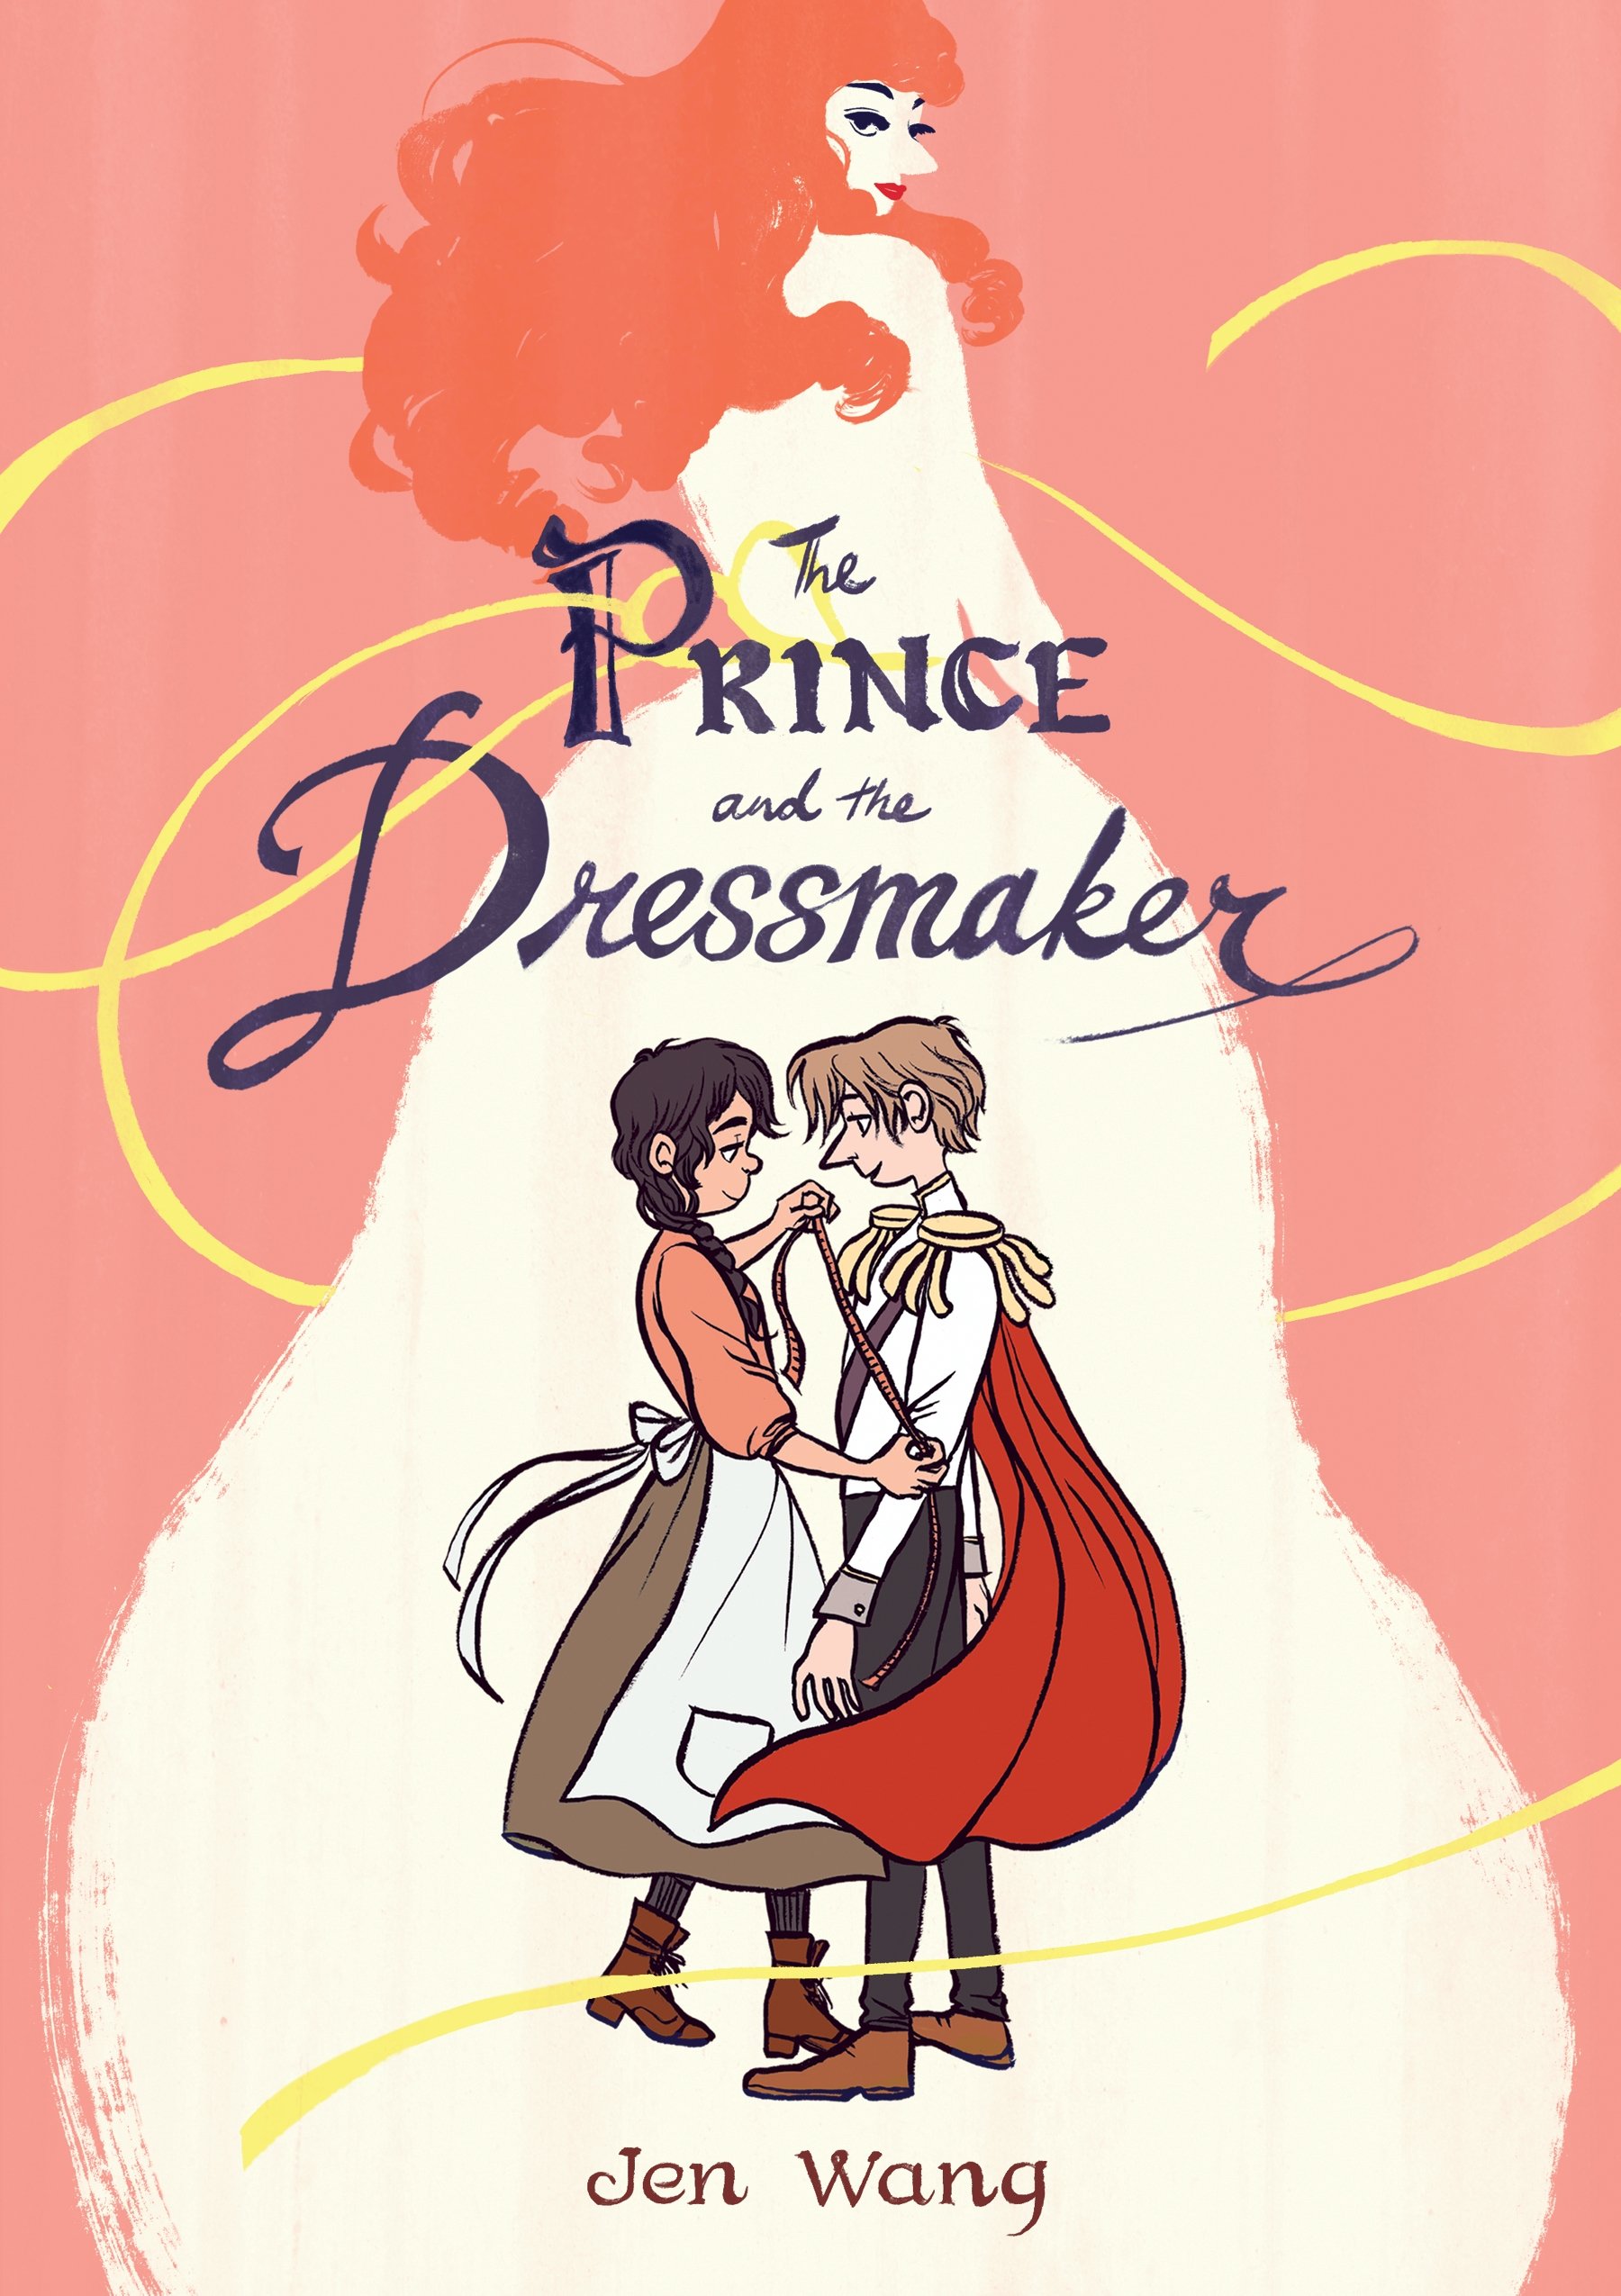 Wang, Jen - The Prince and the Dressmaker.jpg